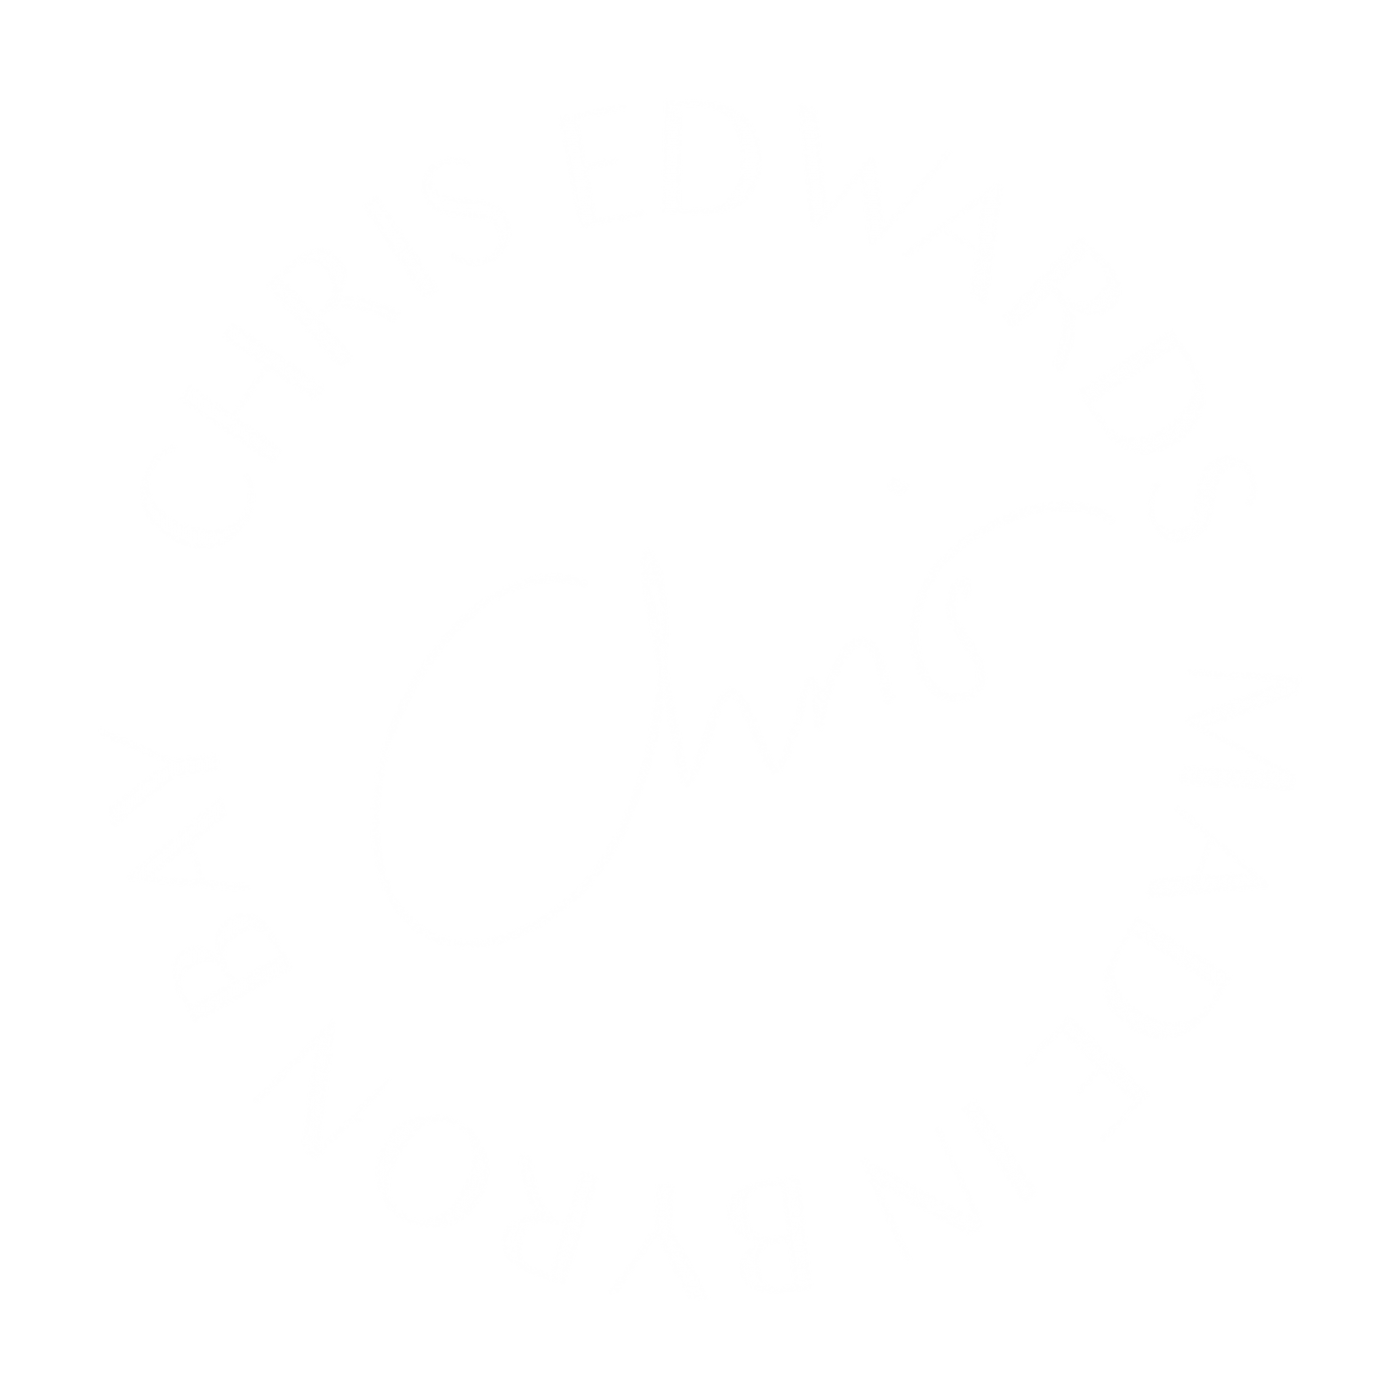 Chris Edwards Business Coach